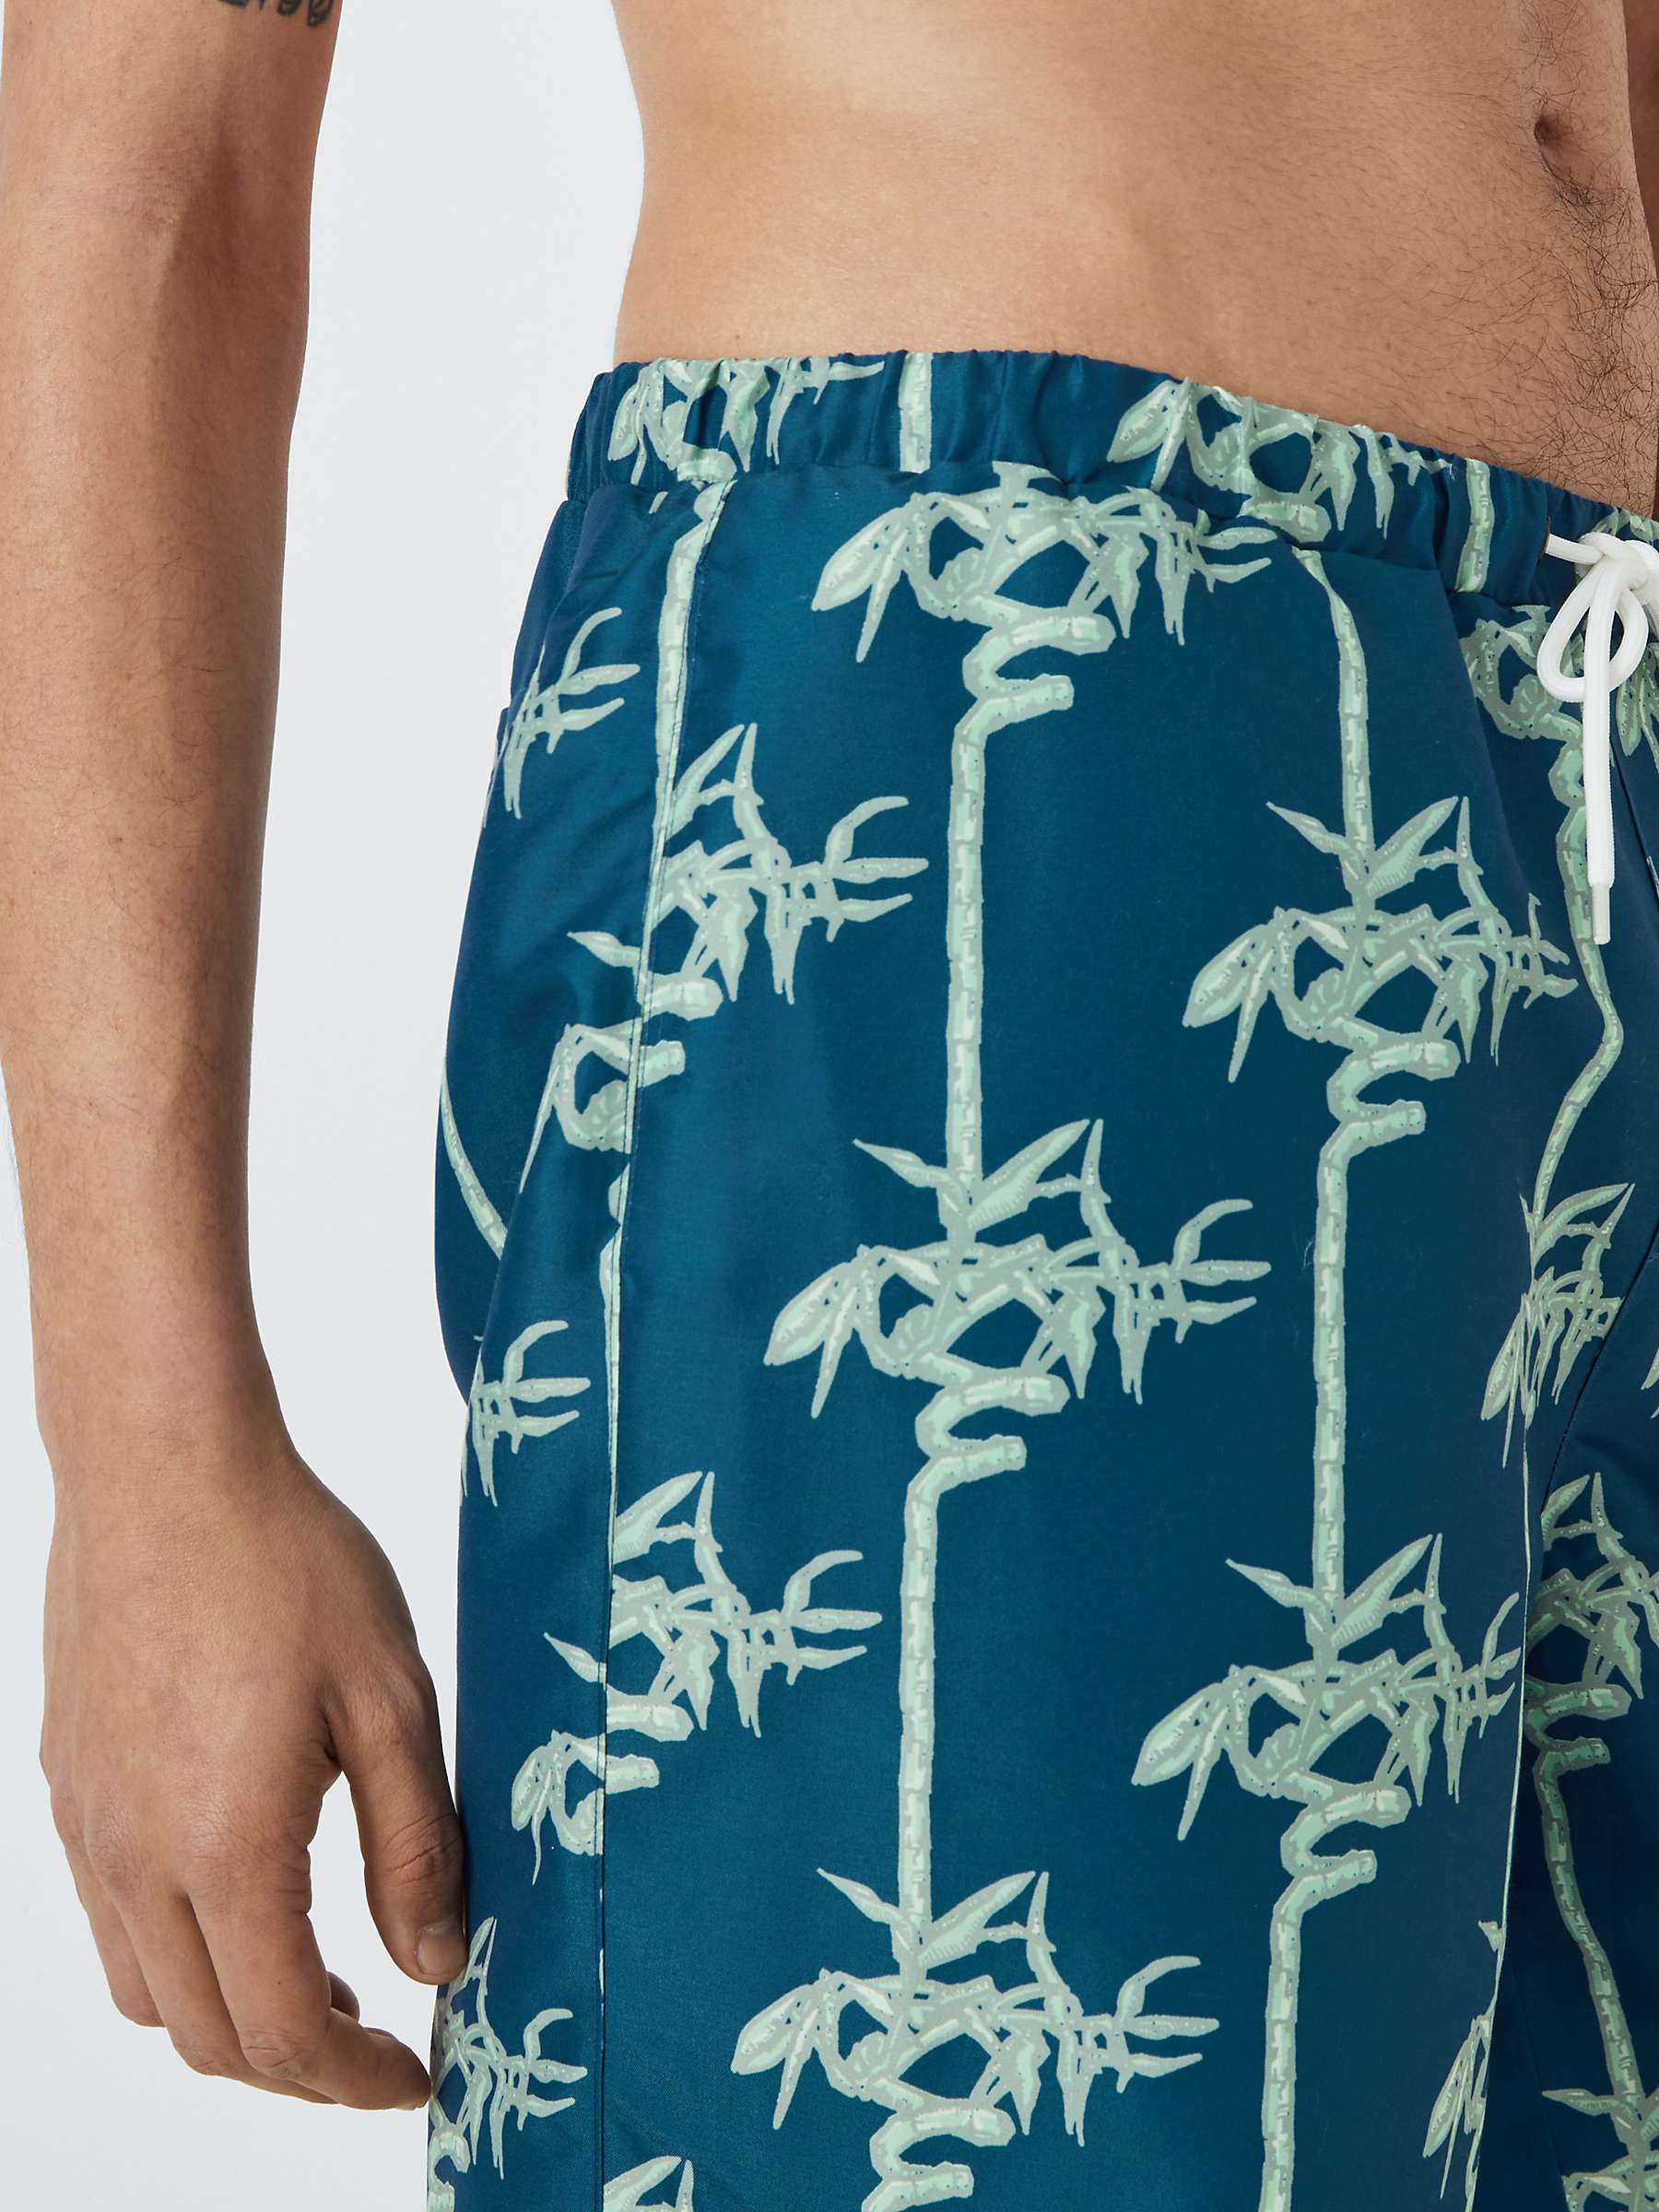 Buy Their Nibs Bamboo Twist Print Swim Shorts, Blue/Green Online at johnlewis.com